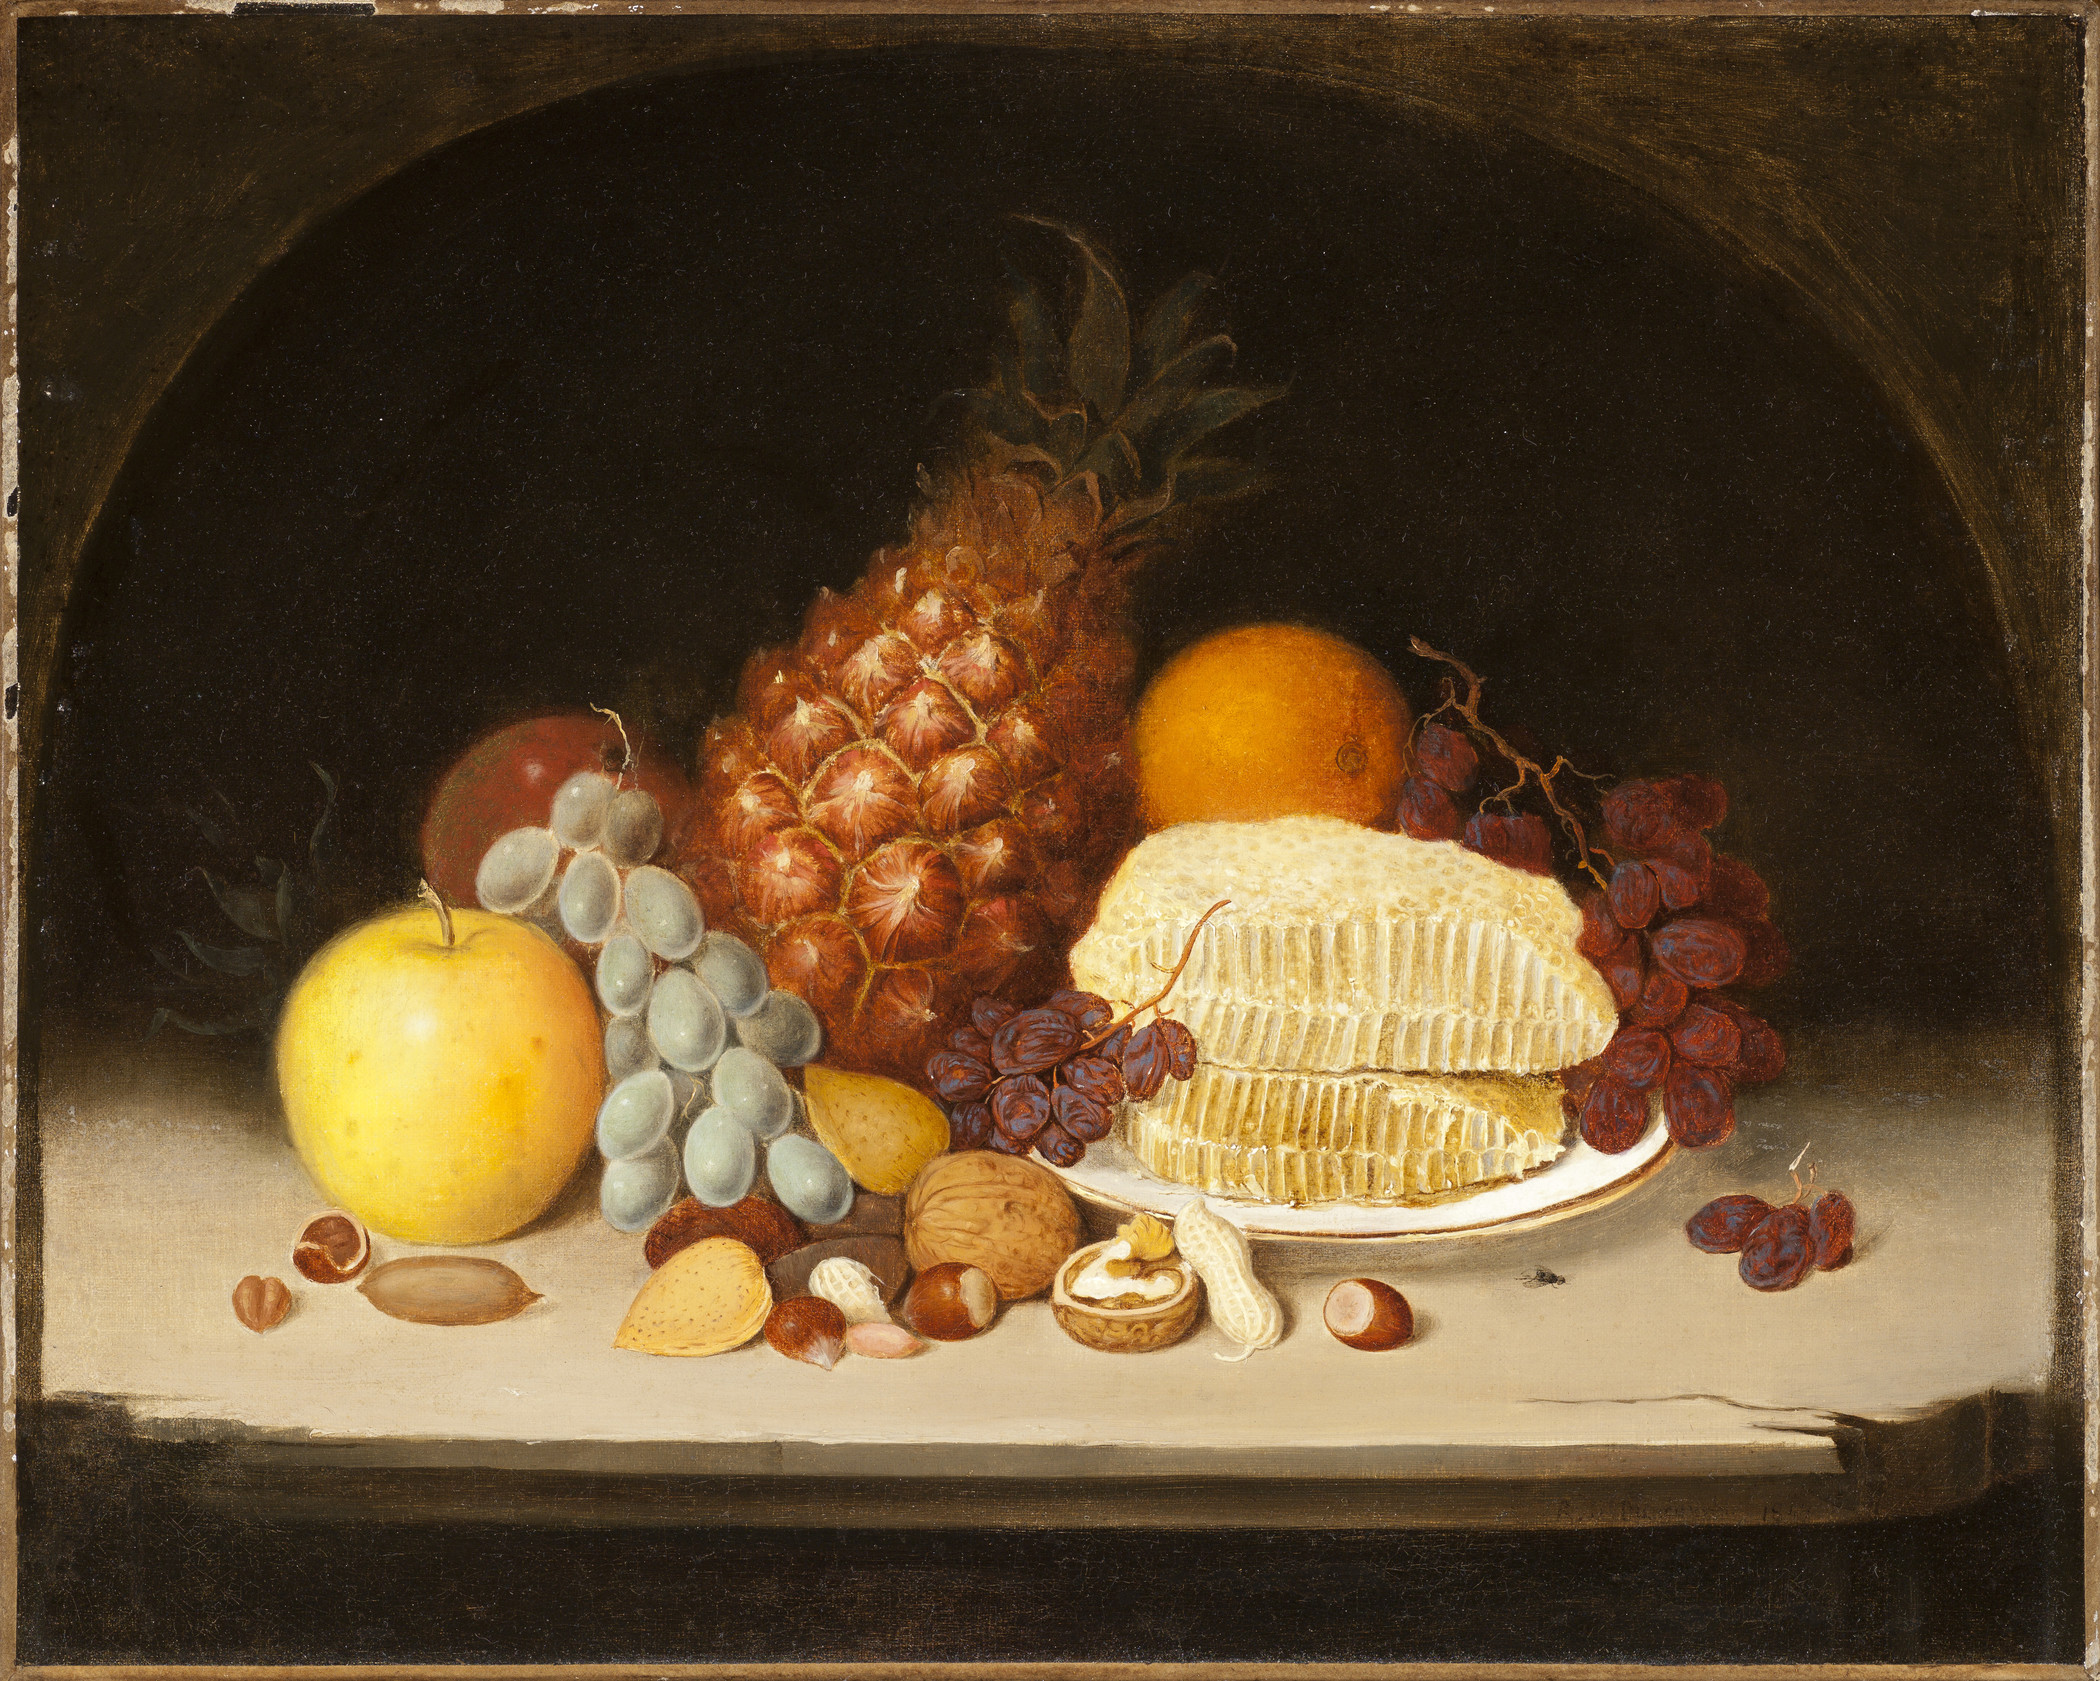 Мртва природа by Robert Duncanson - 1849. - 41 x 51.28 cm 